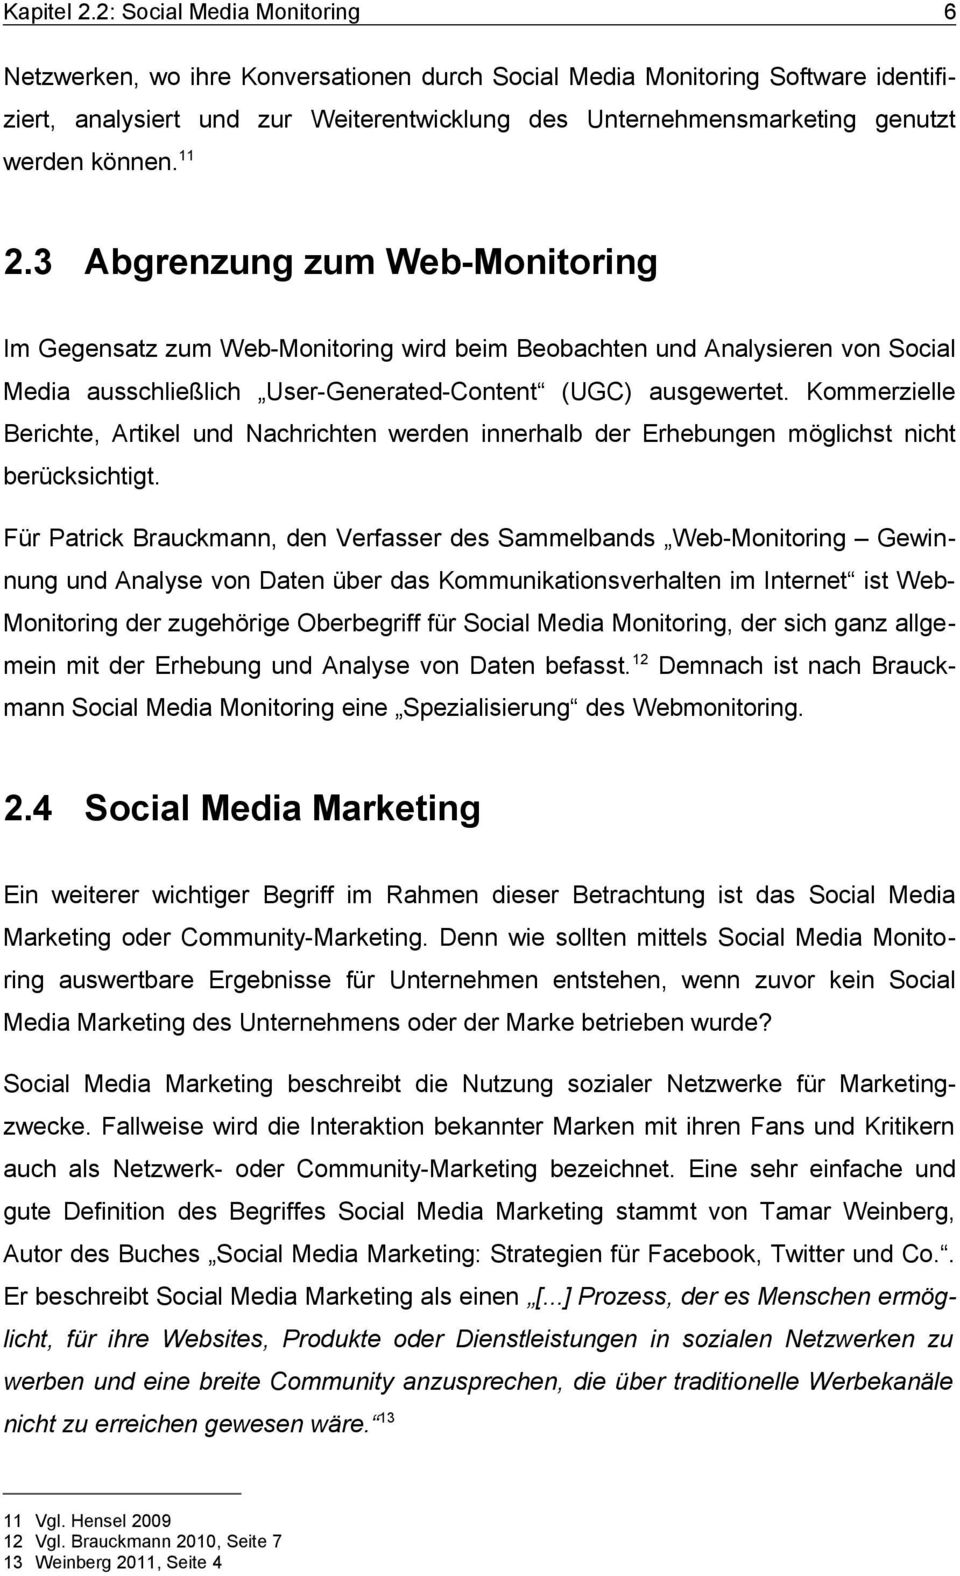 Bachelorarbeit Frau Doreen Ulbricht Social Media Monitoring Eine